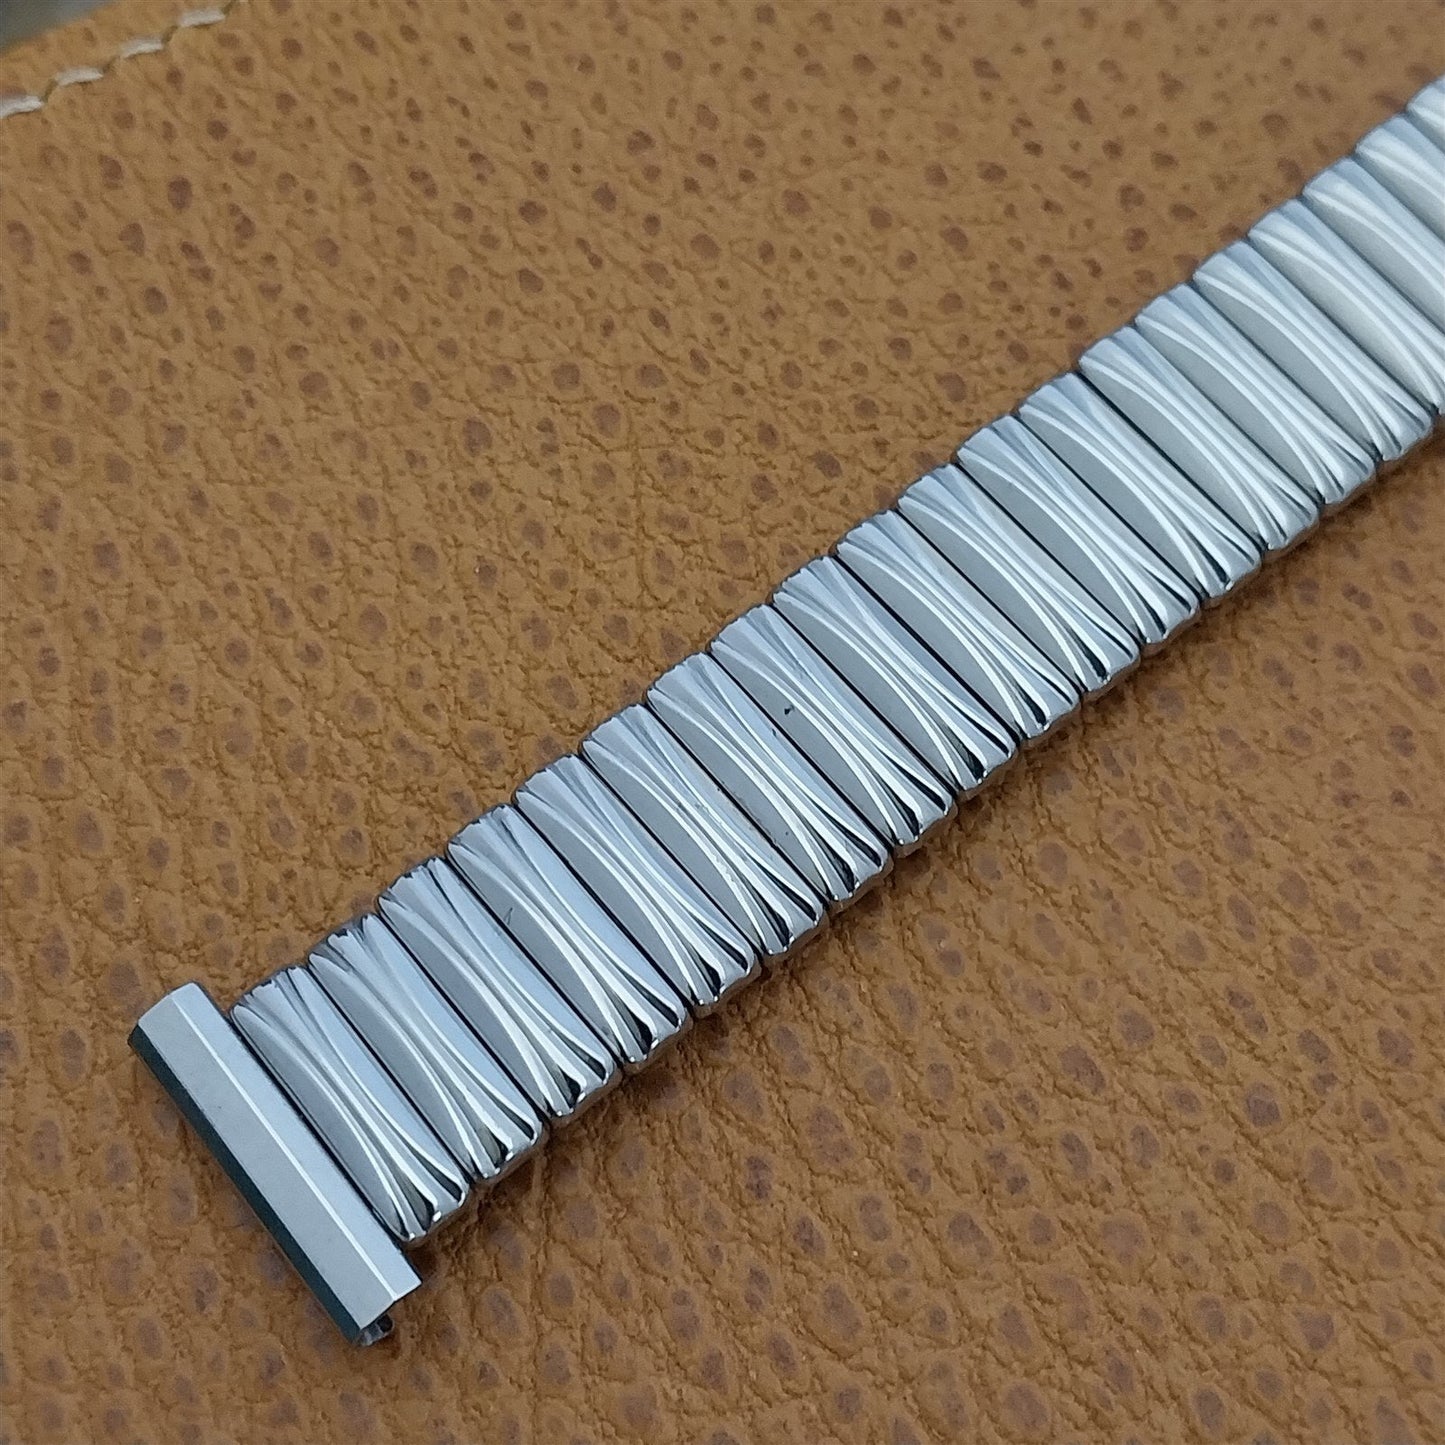 19mm 18mm 16mm Kreisler Short Stainless Steel Expansion 1960s Vintage Watch Band